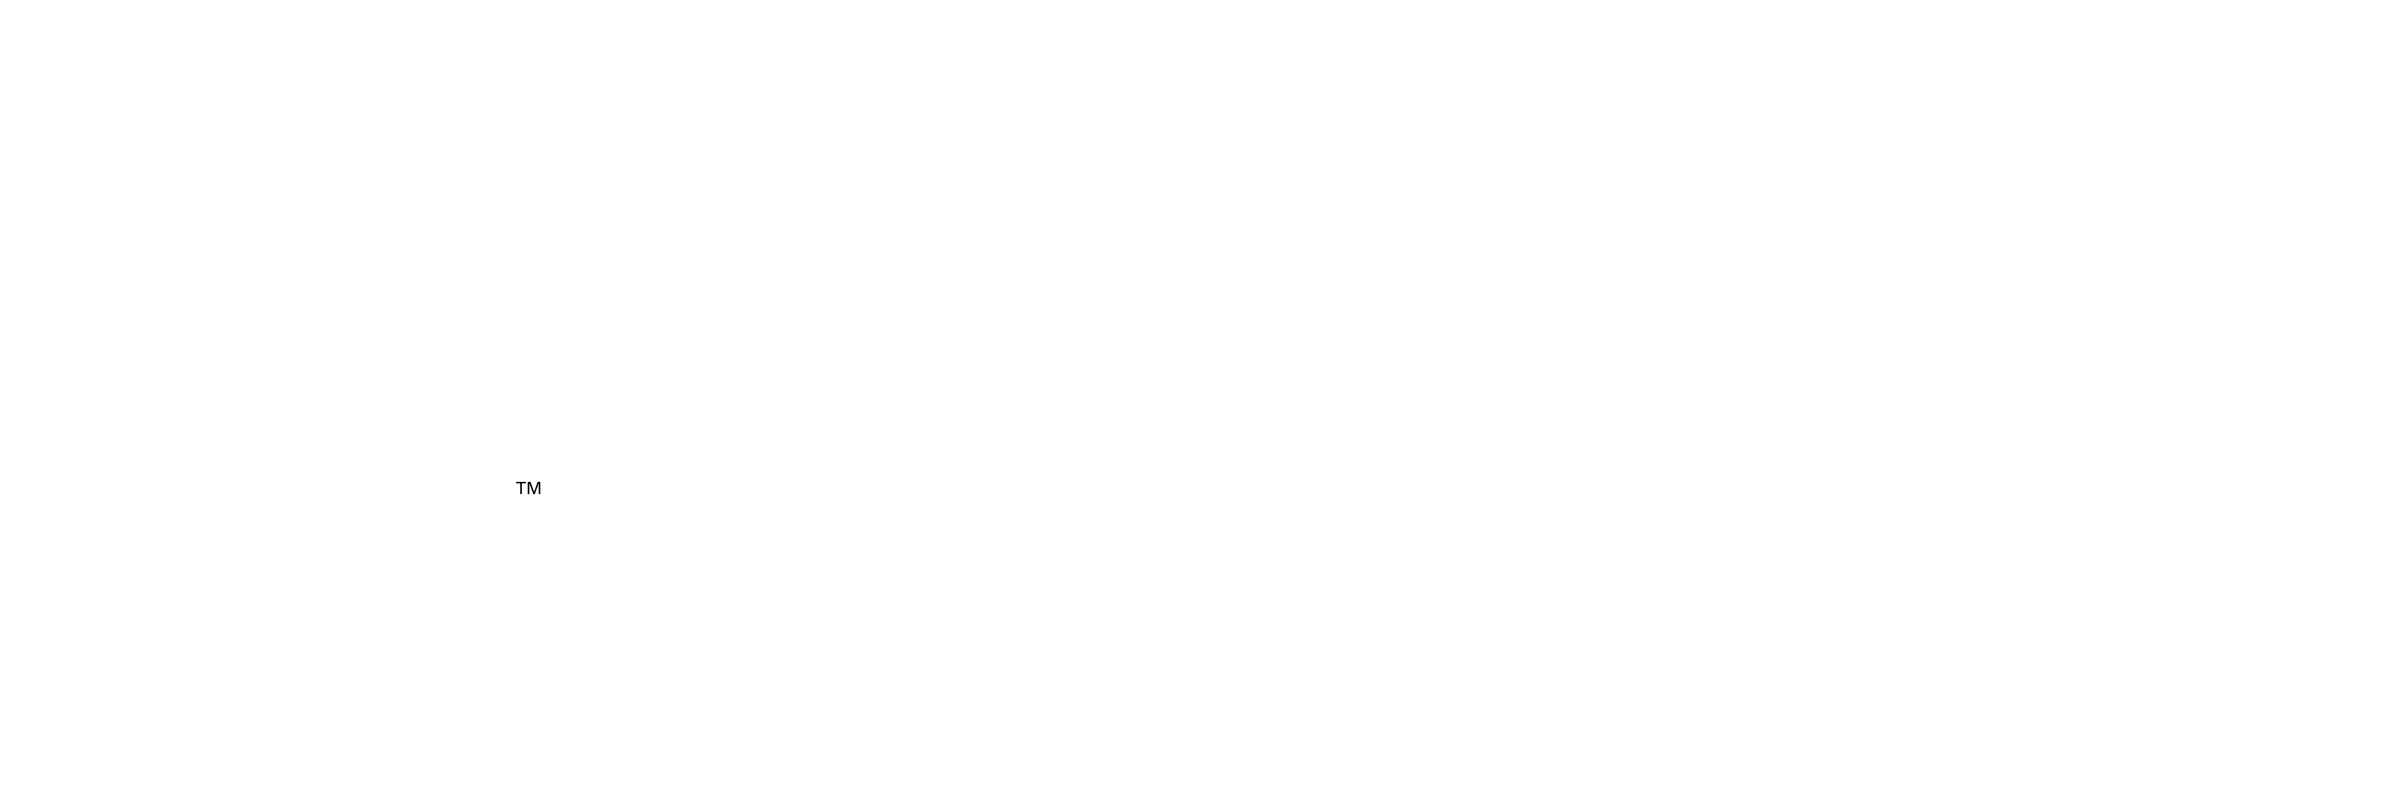 crestron-logo-black-and-white